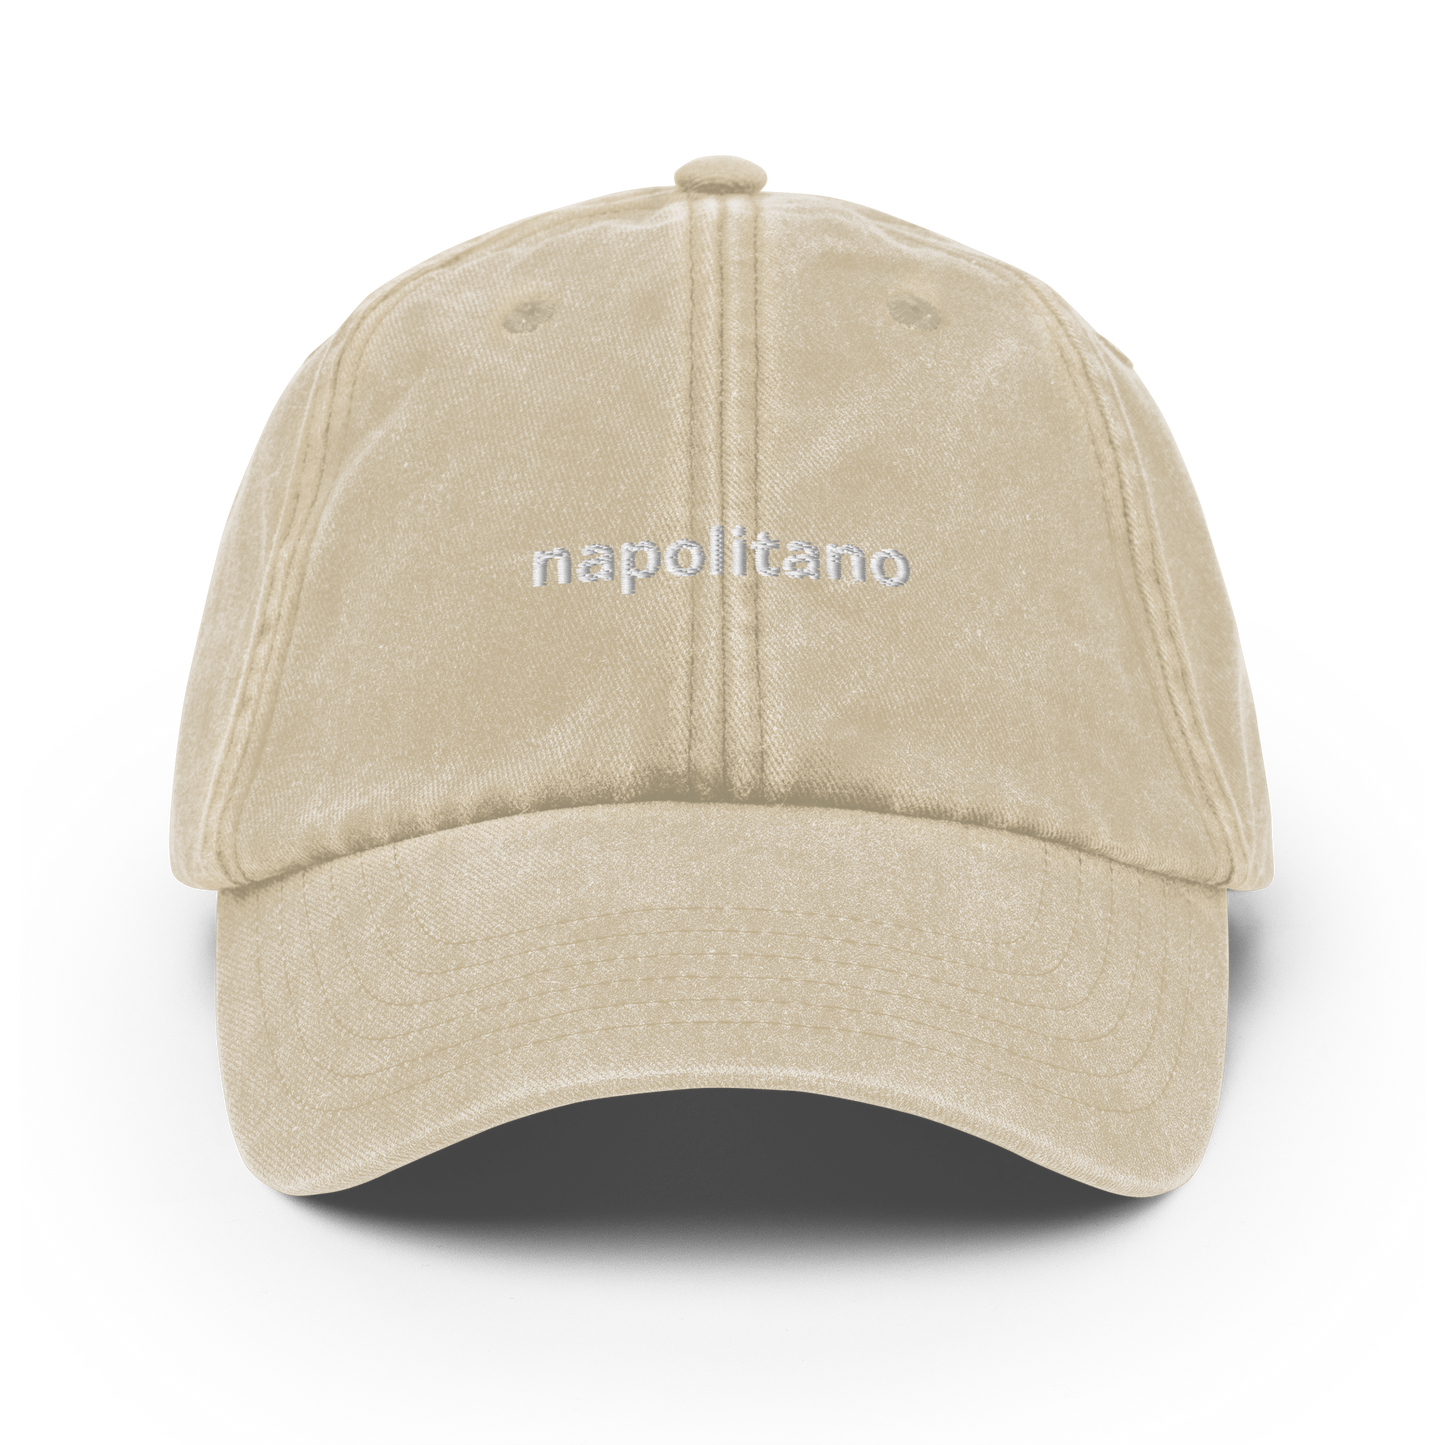 Napolitano - Vintage Hat